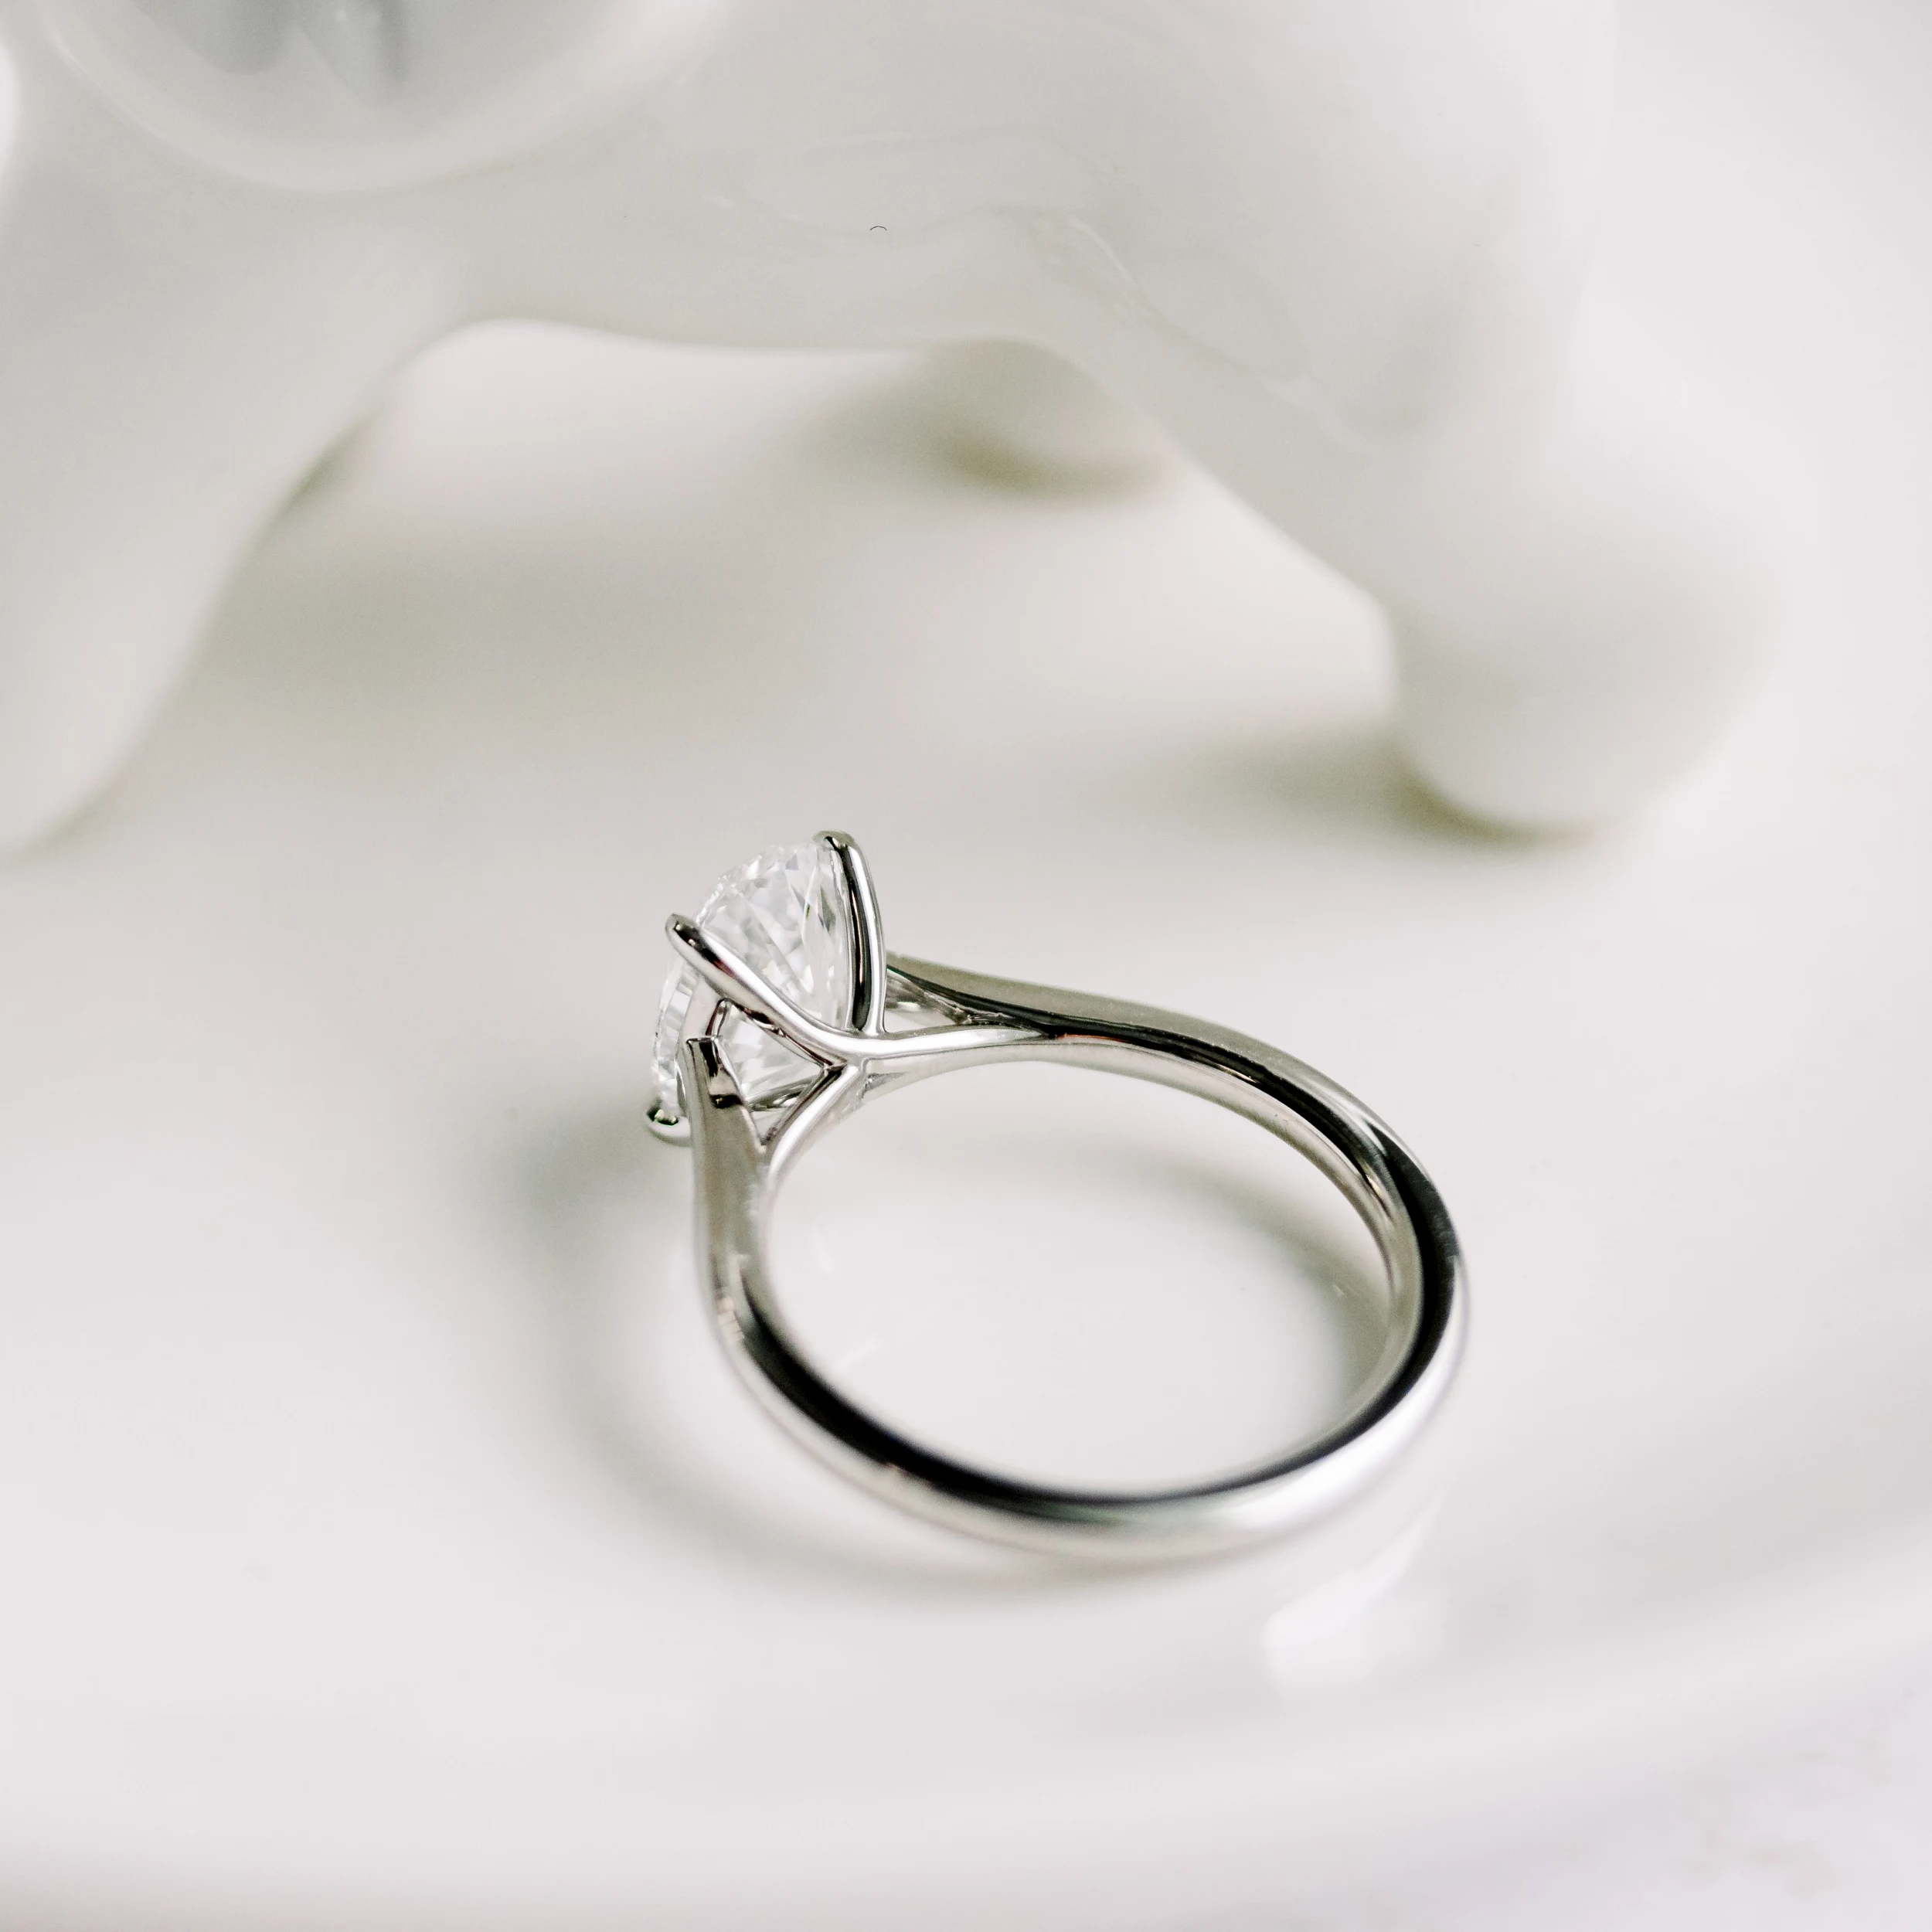 Exceptional Quality 1.75 Carat Lab Diamonds Oval Trellis Solitaire Diamond Engagement Ring in Platinum (Profile View)